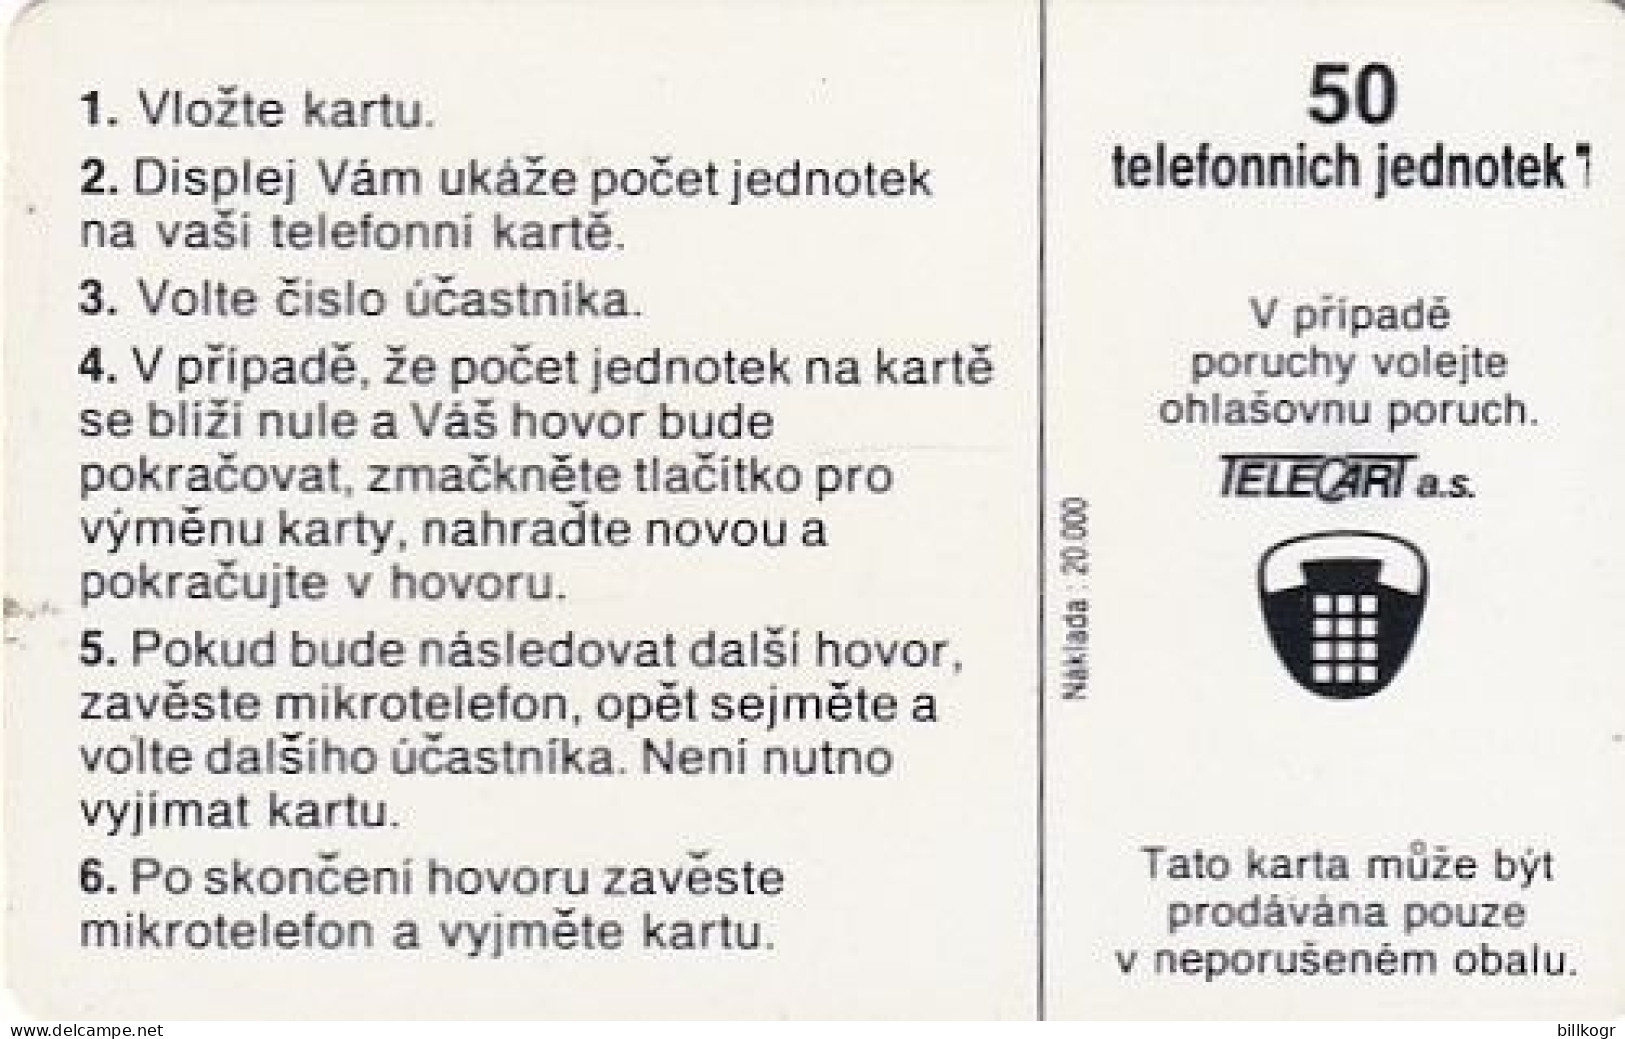 CZECHOSLOVAKIA - Vystava V Praze, Telecart A.s. First Issue 50 Units, Chip SC6, Tirage %20000, 06/91, Used - Tsjechoslowakije